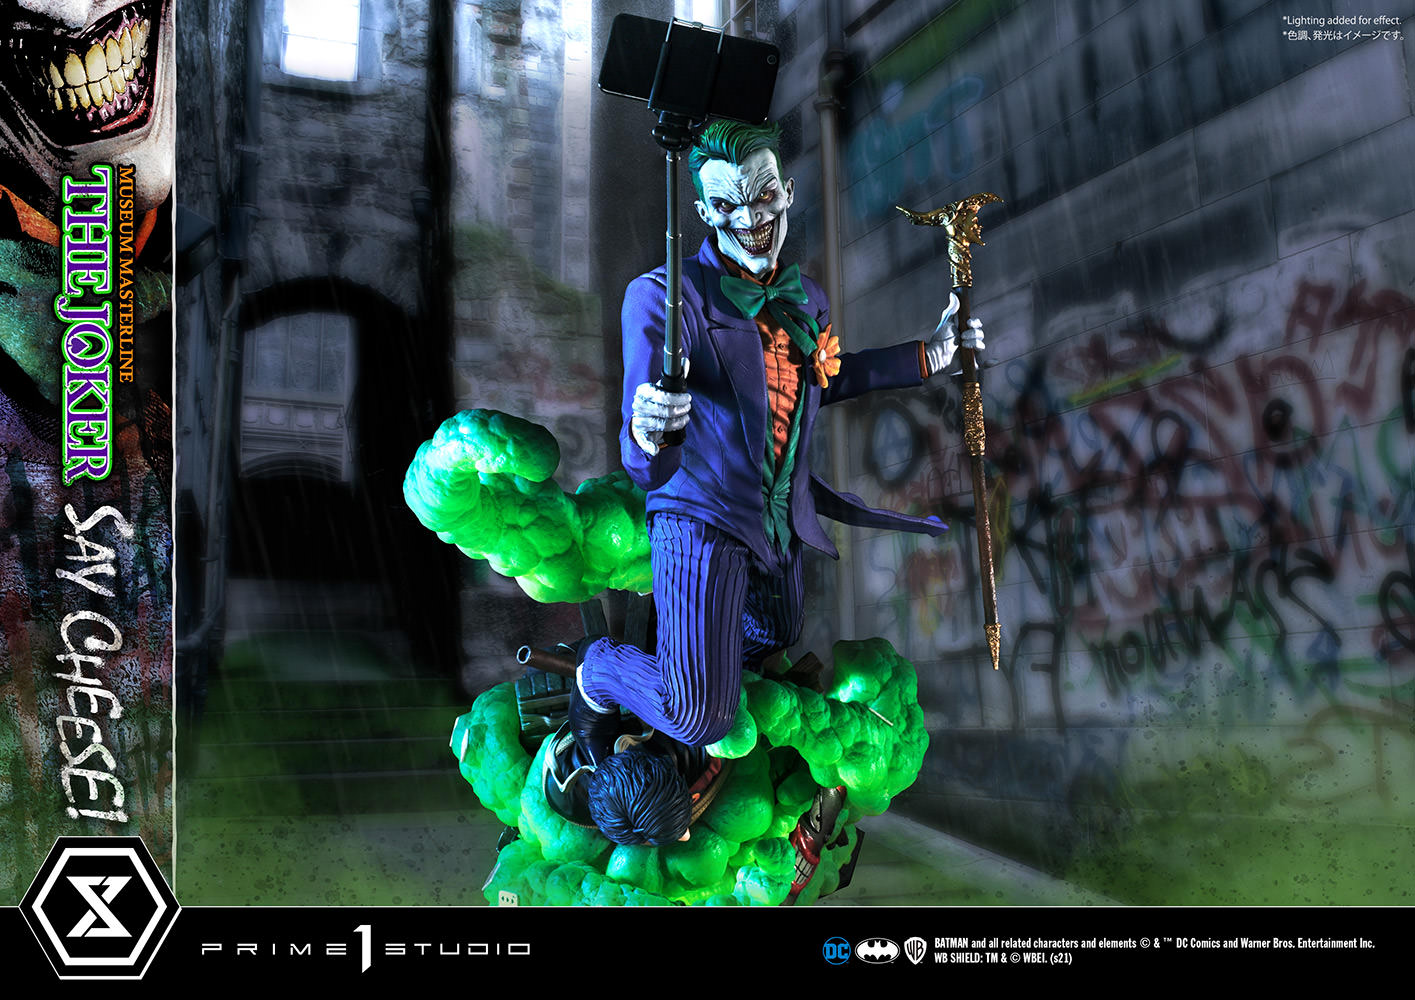 The Joker “Say Cheese!"